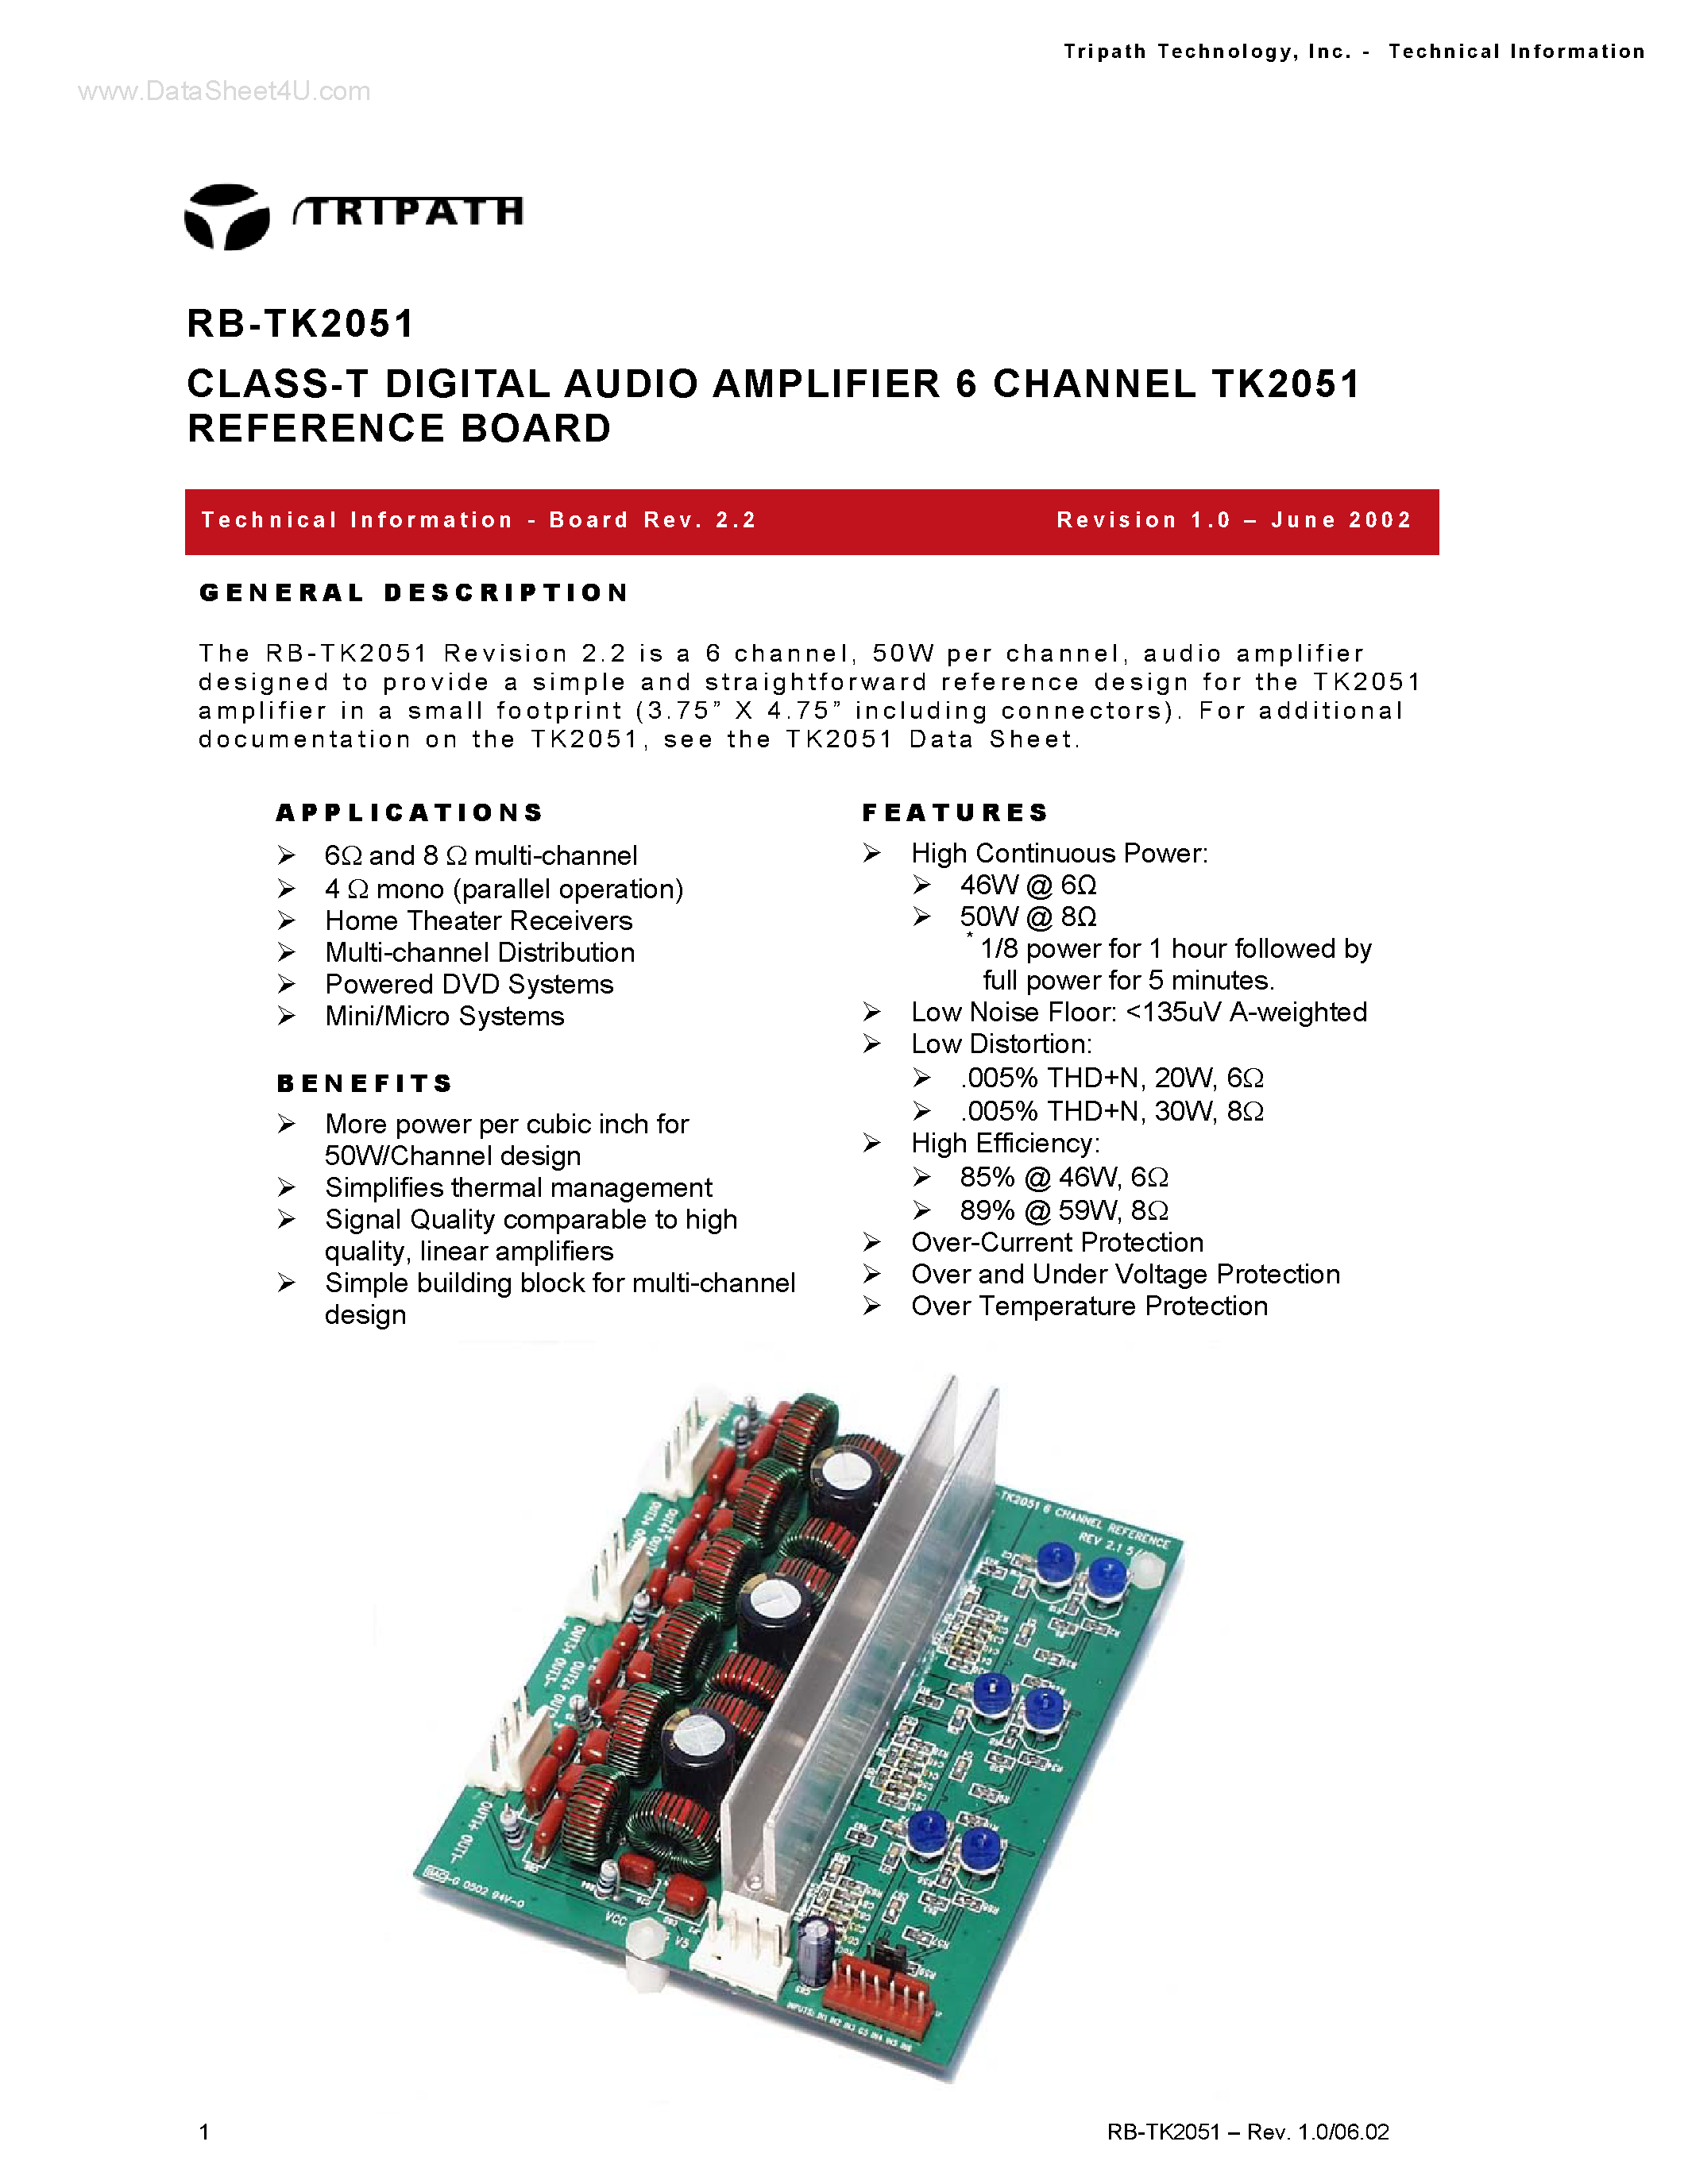 Даташит RB-TK2051 - CLASS-T DIGITAL AUDIO AMPLIFIER страница 1